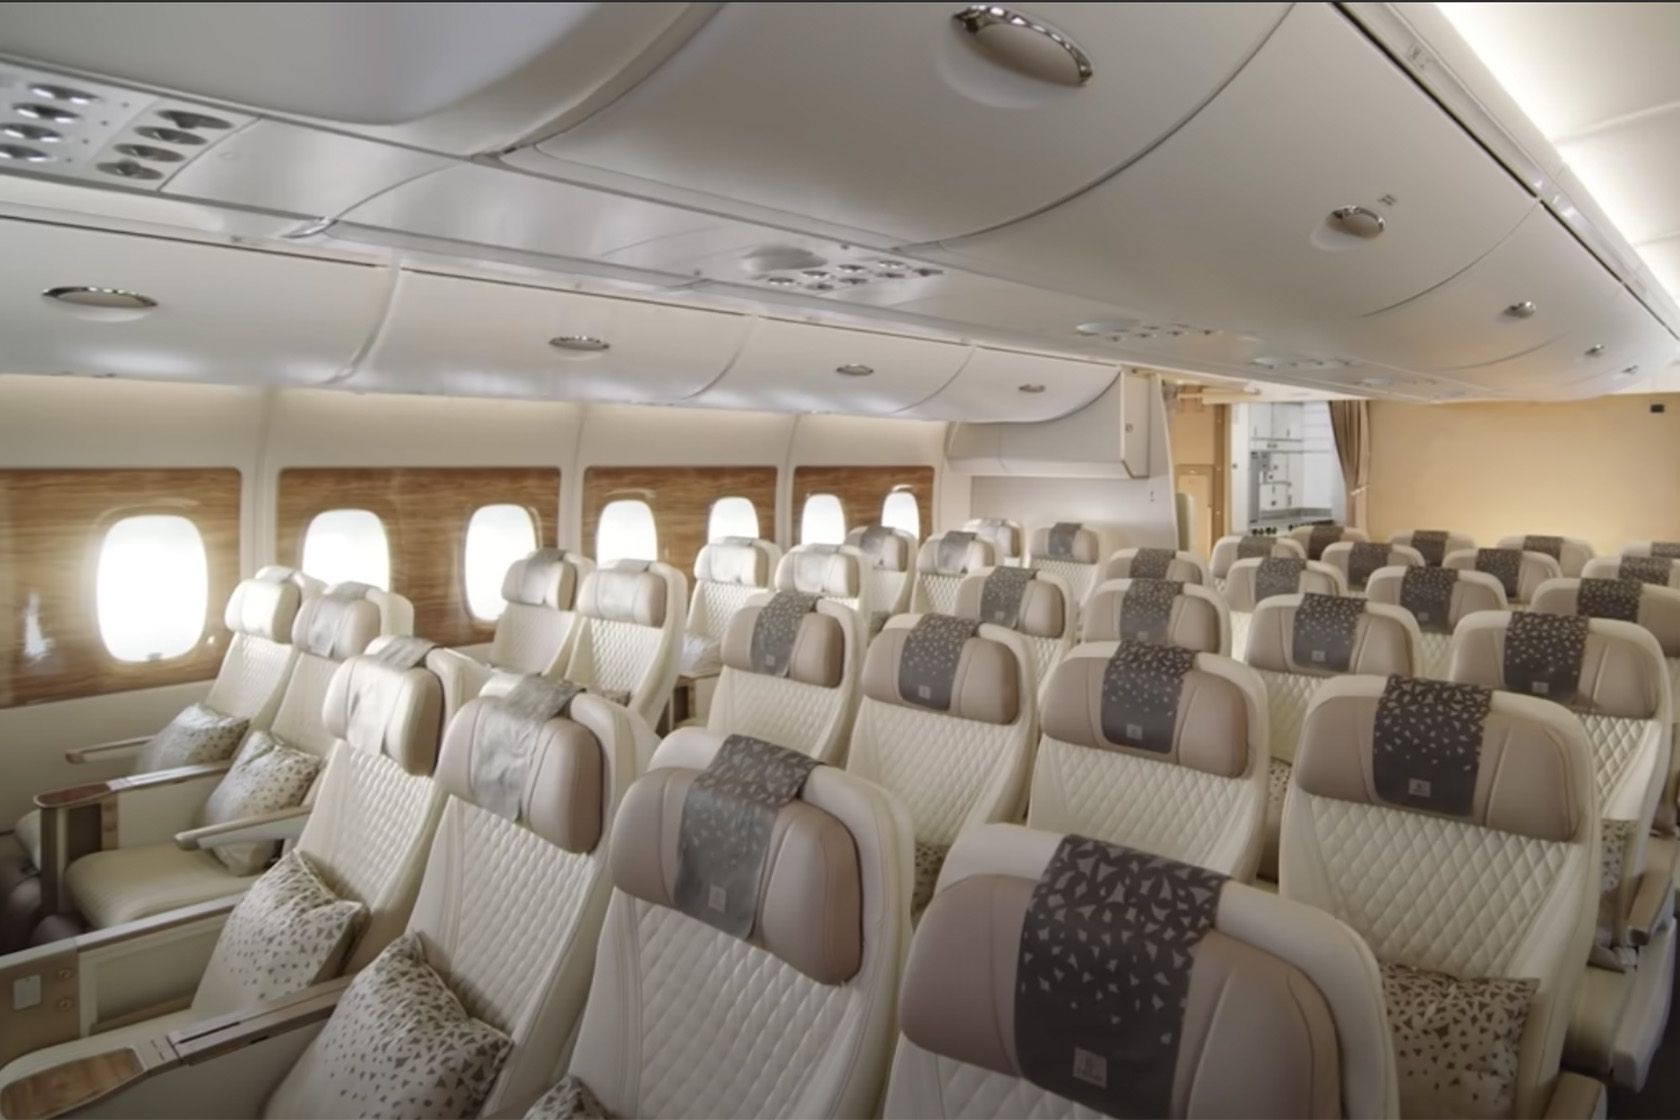 Emirates' premium economy launches Aug. 1 on routes to Europe and